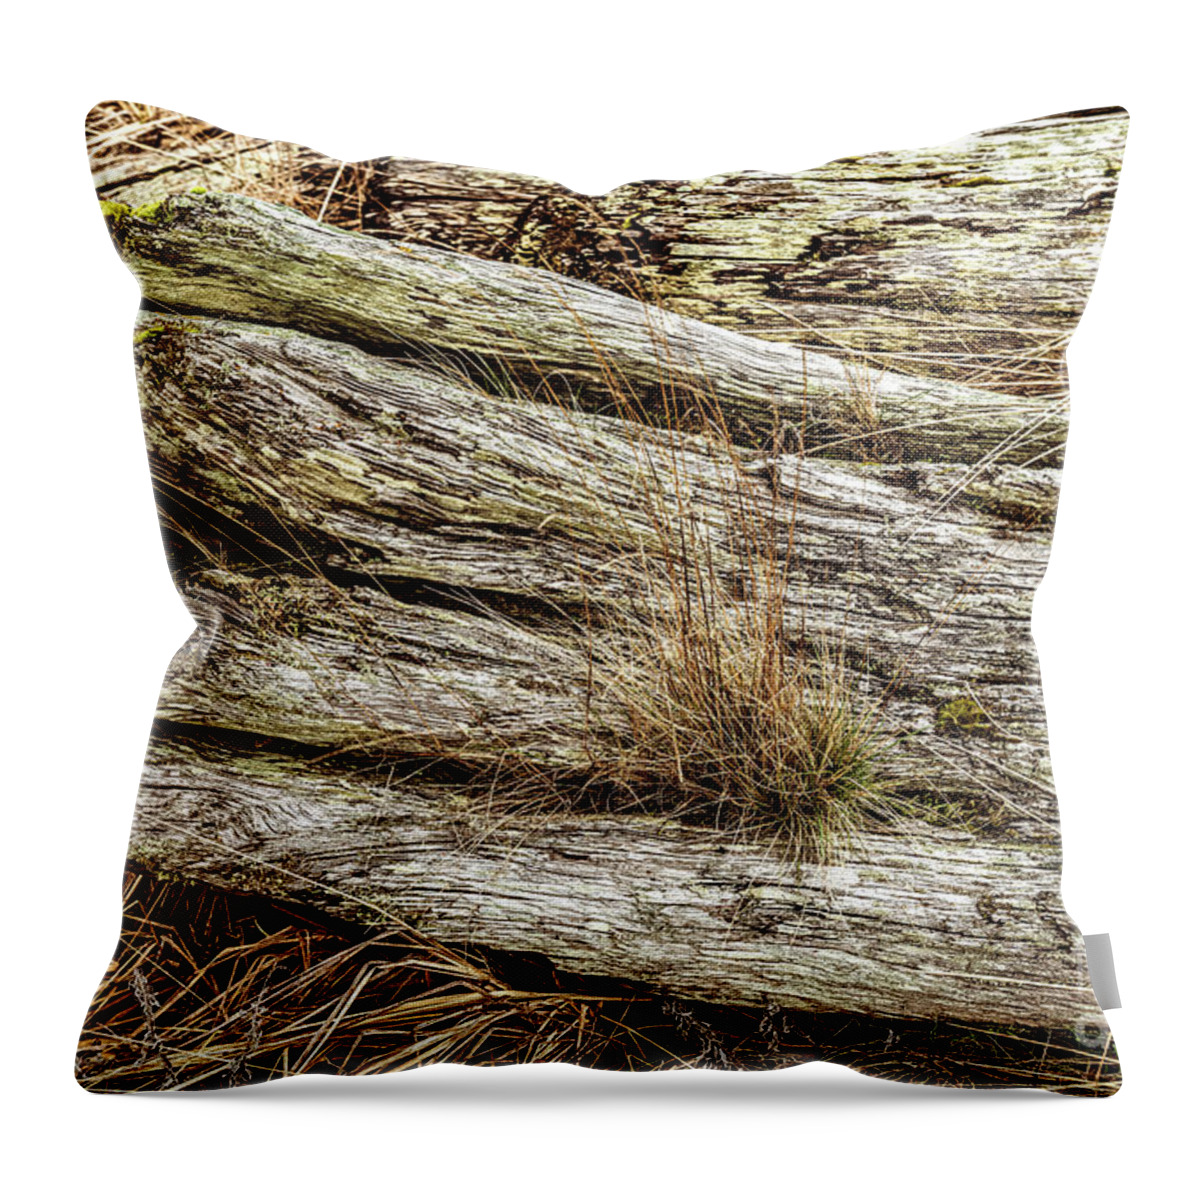 Beach Driftwood Throw Pillow featuring the photograph Beach Driftwood 17 by M G Whittingham